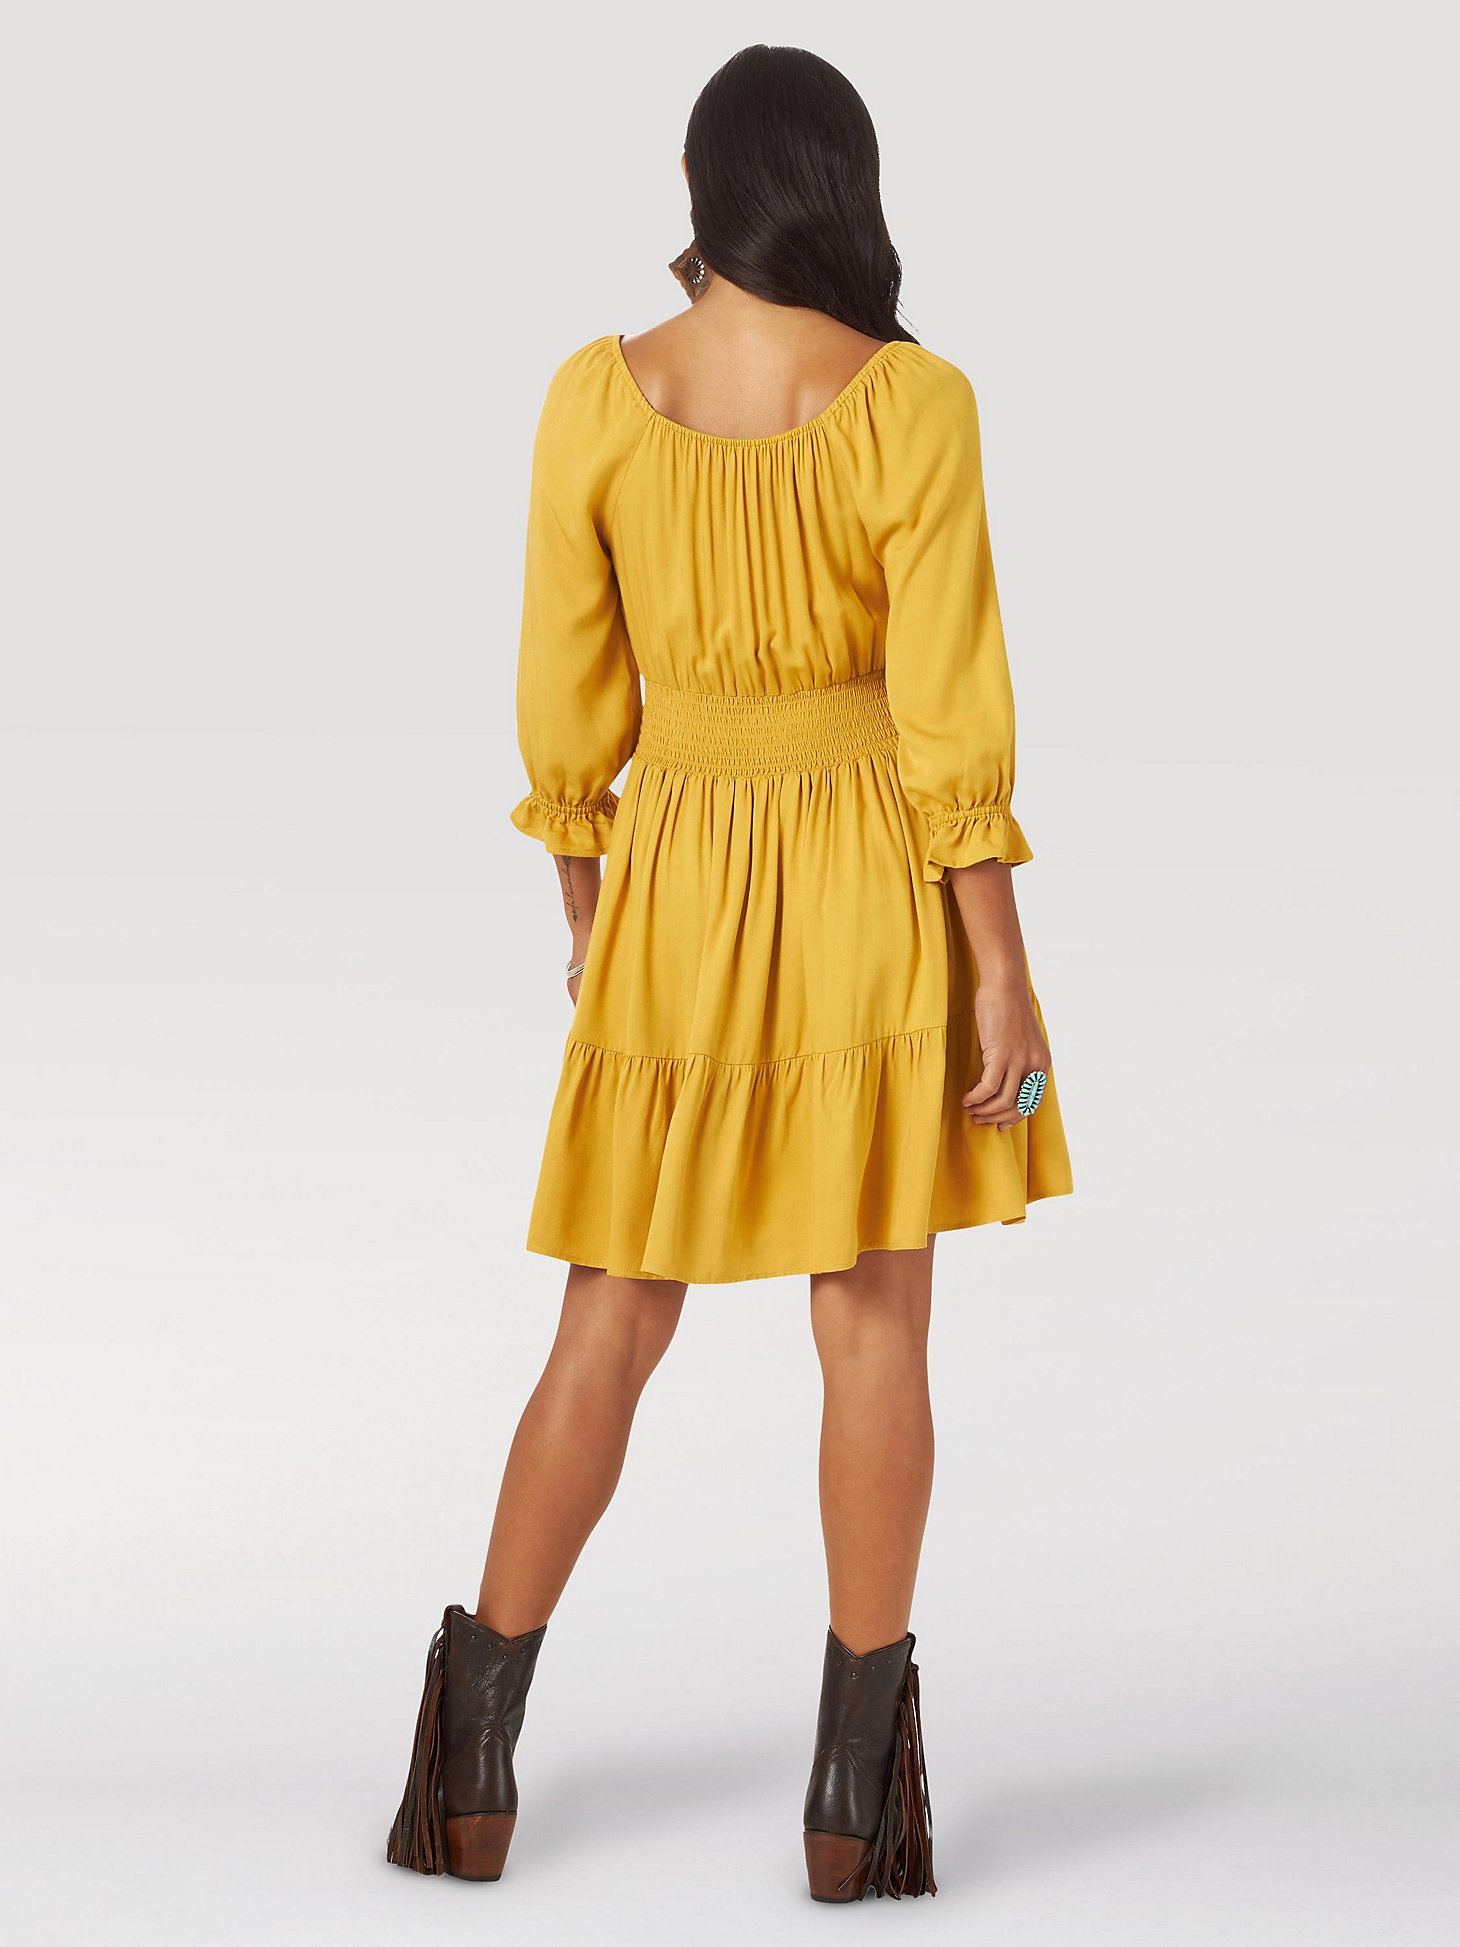 Women's Wrangler Retro® Smocked Waist Three Quarter Sleeve Peasant Dress in yellow alternative view 1